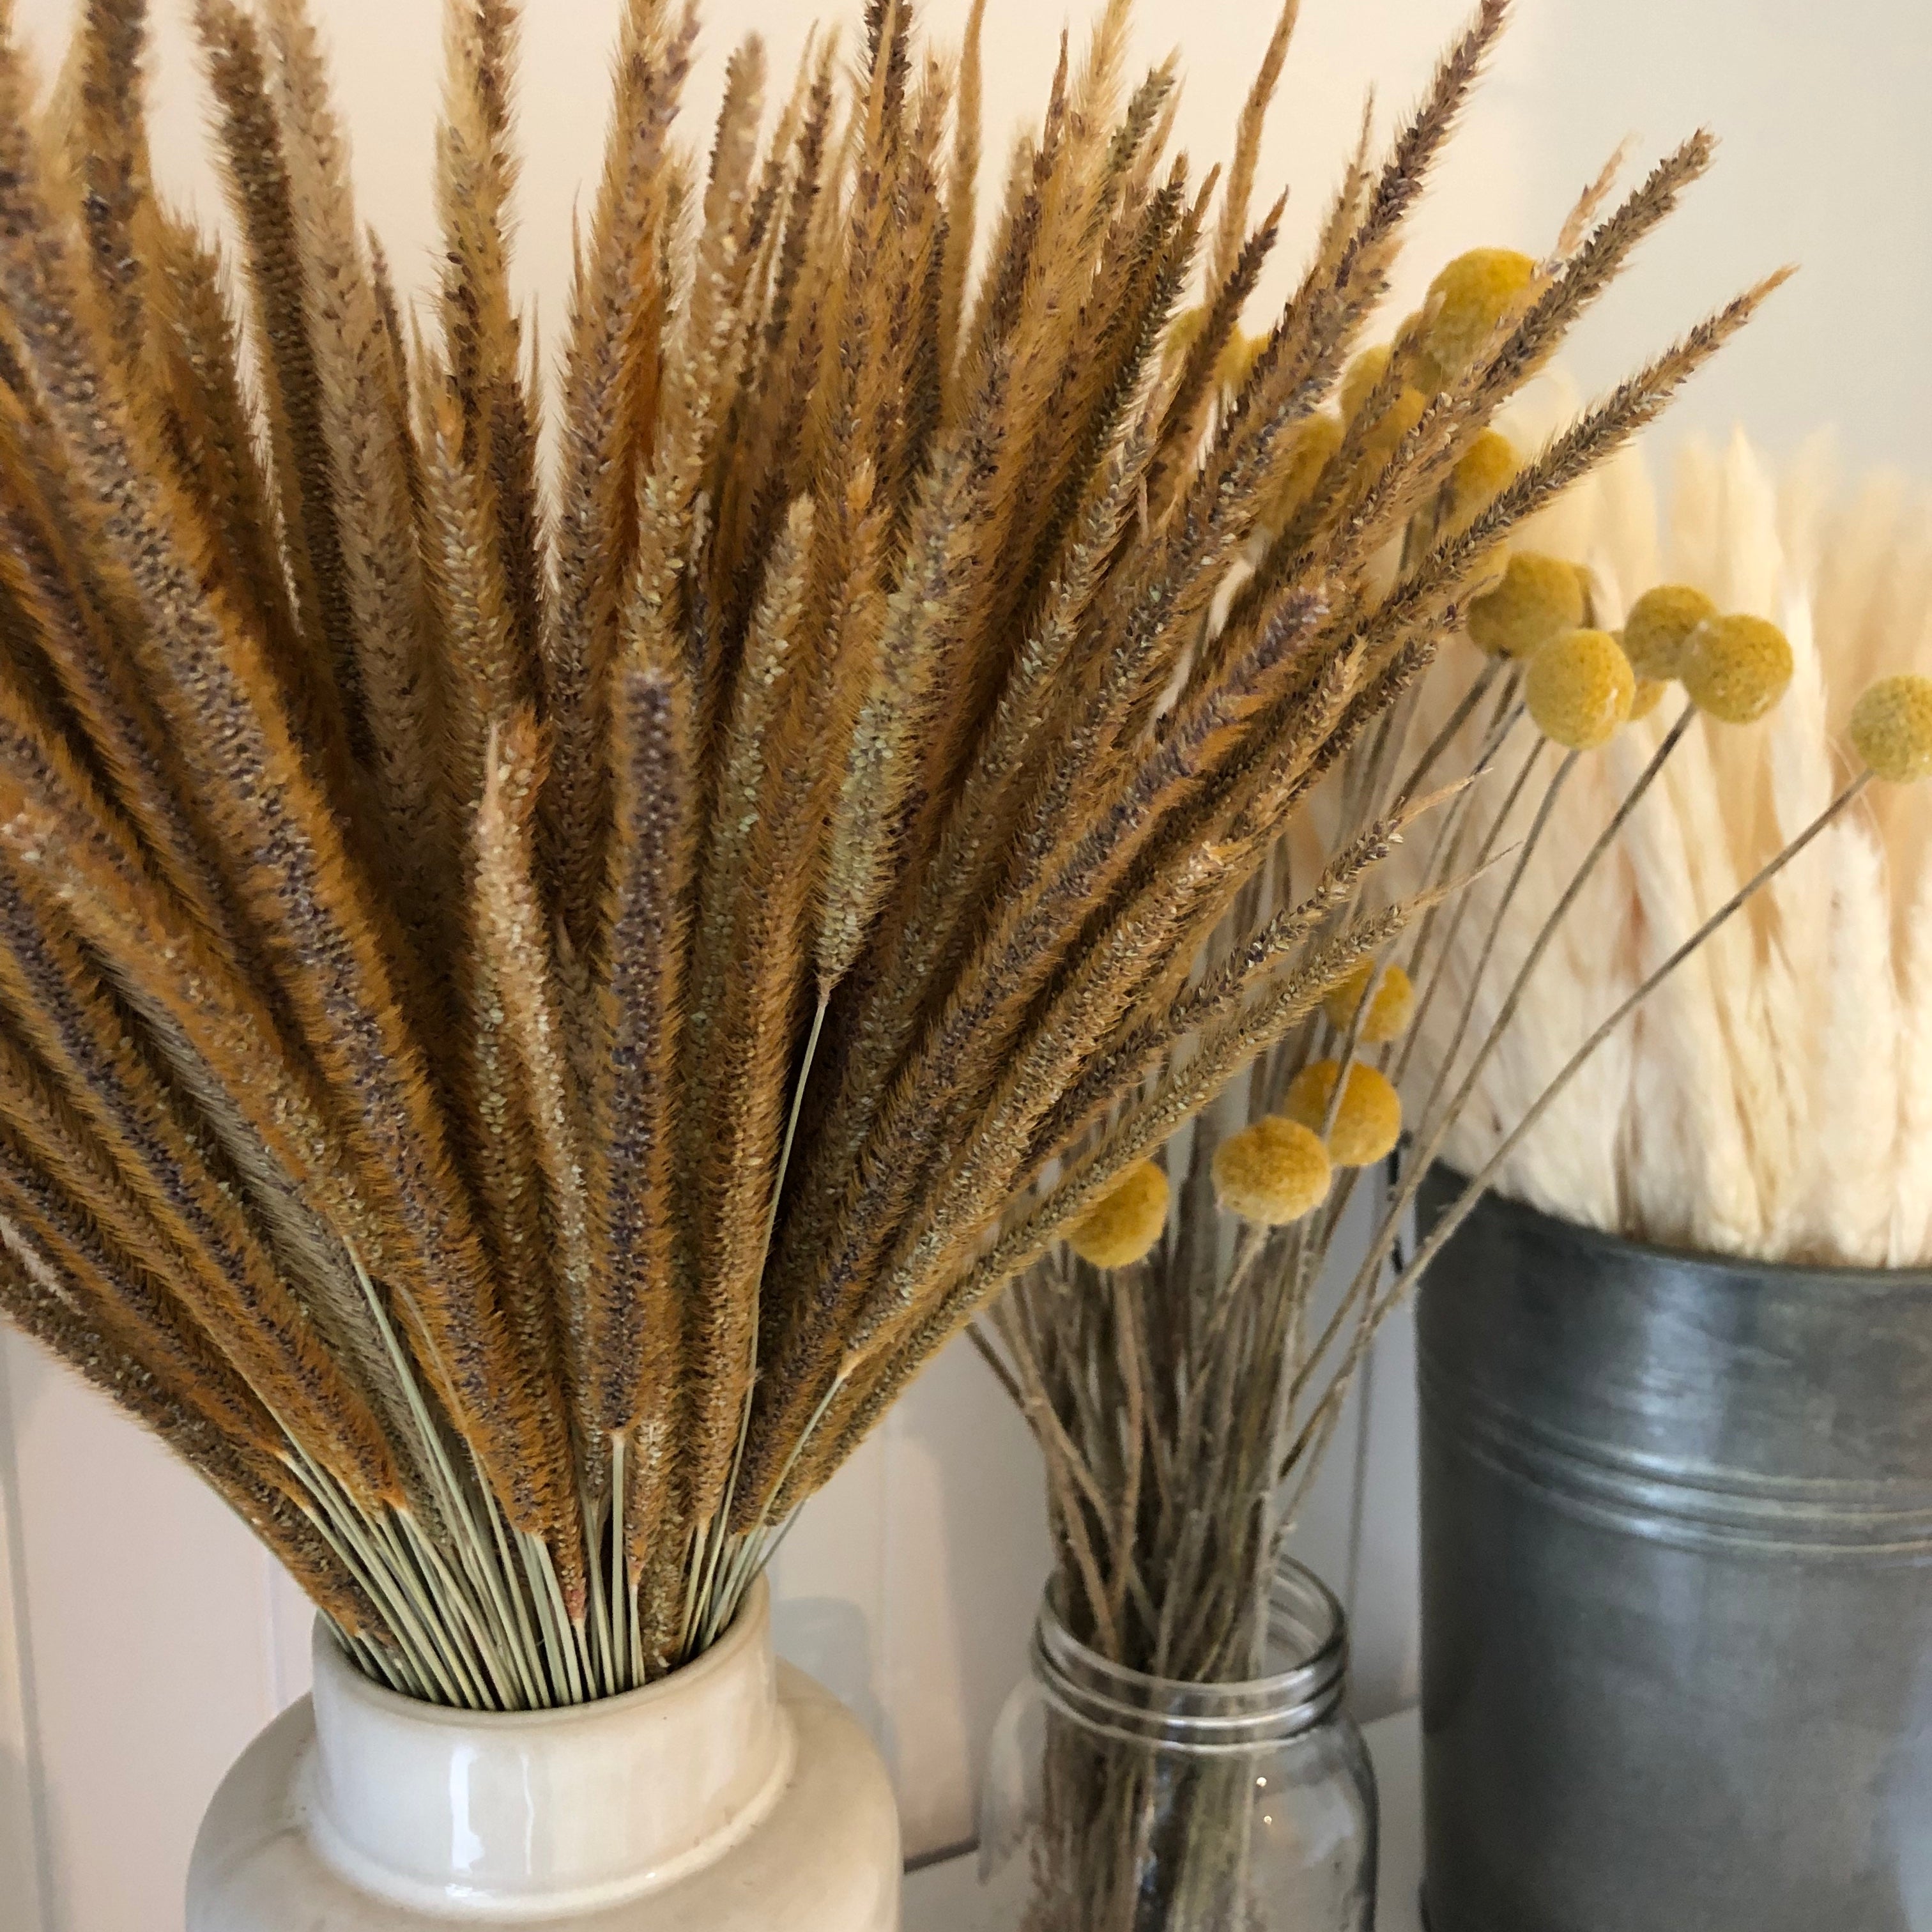 Dried Kirin Grass Stems x 50 pcs - Natural ((BULK PACK))